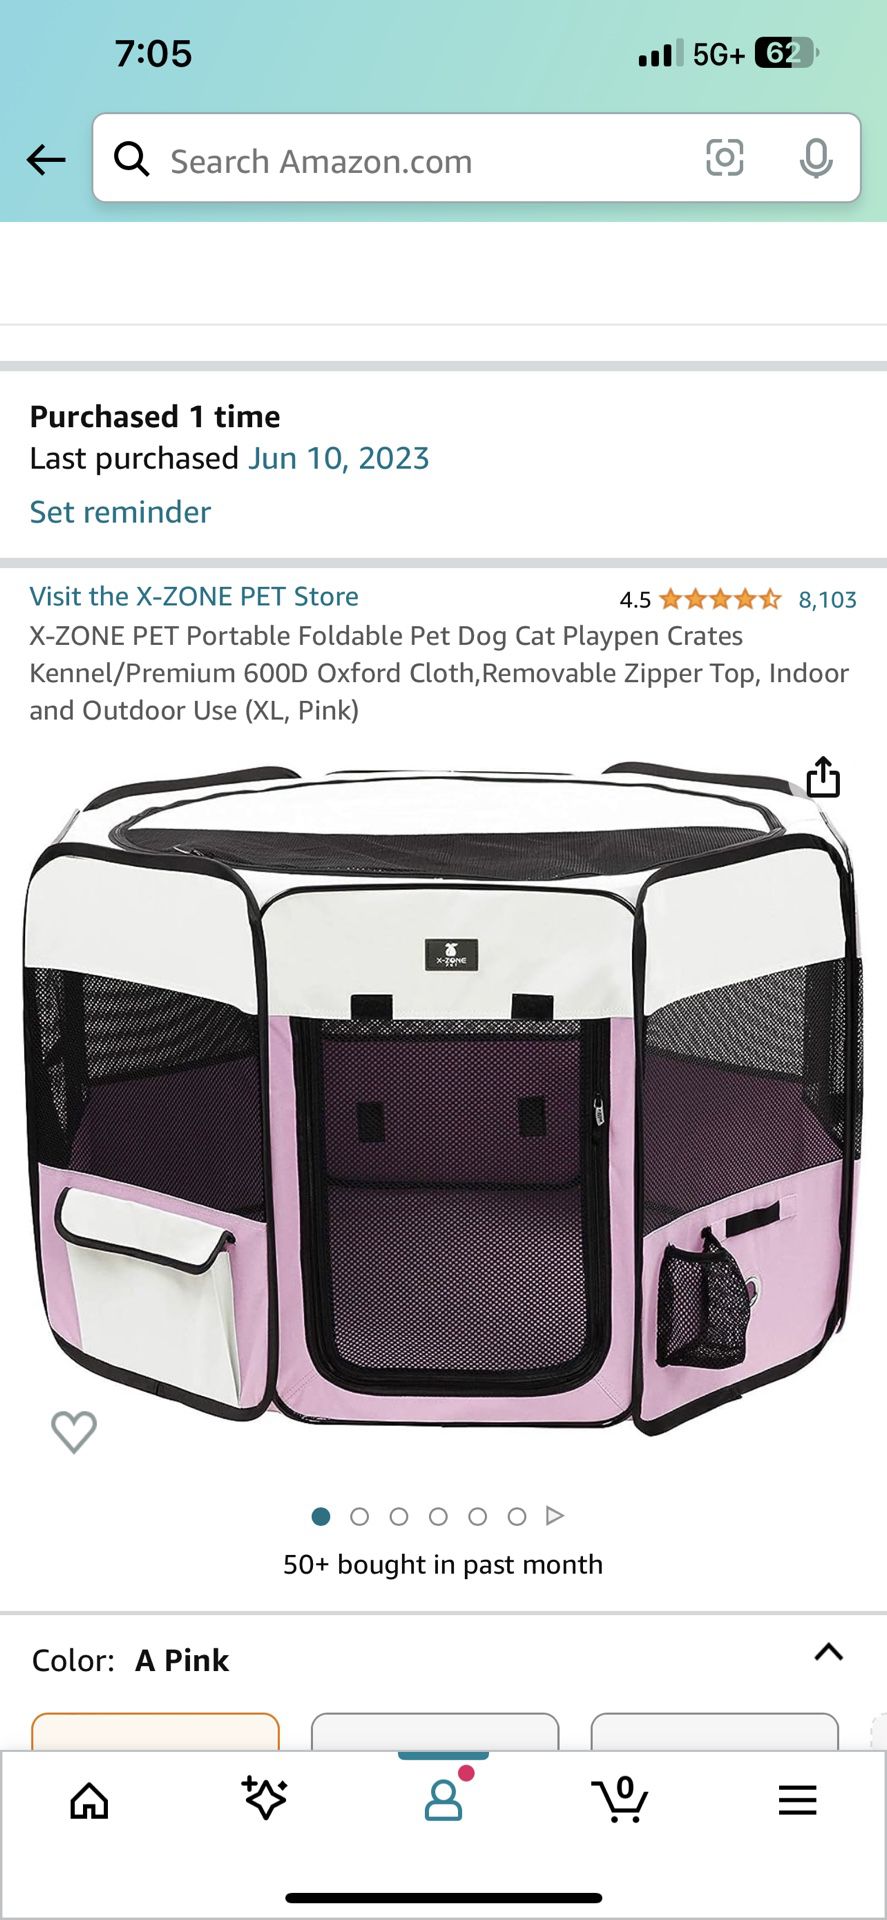 XL Pink Portable Foldable Pet Dog Cat Playpen Crates 